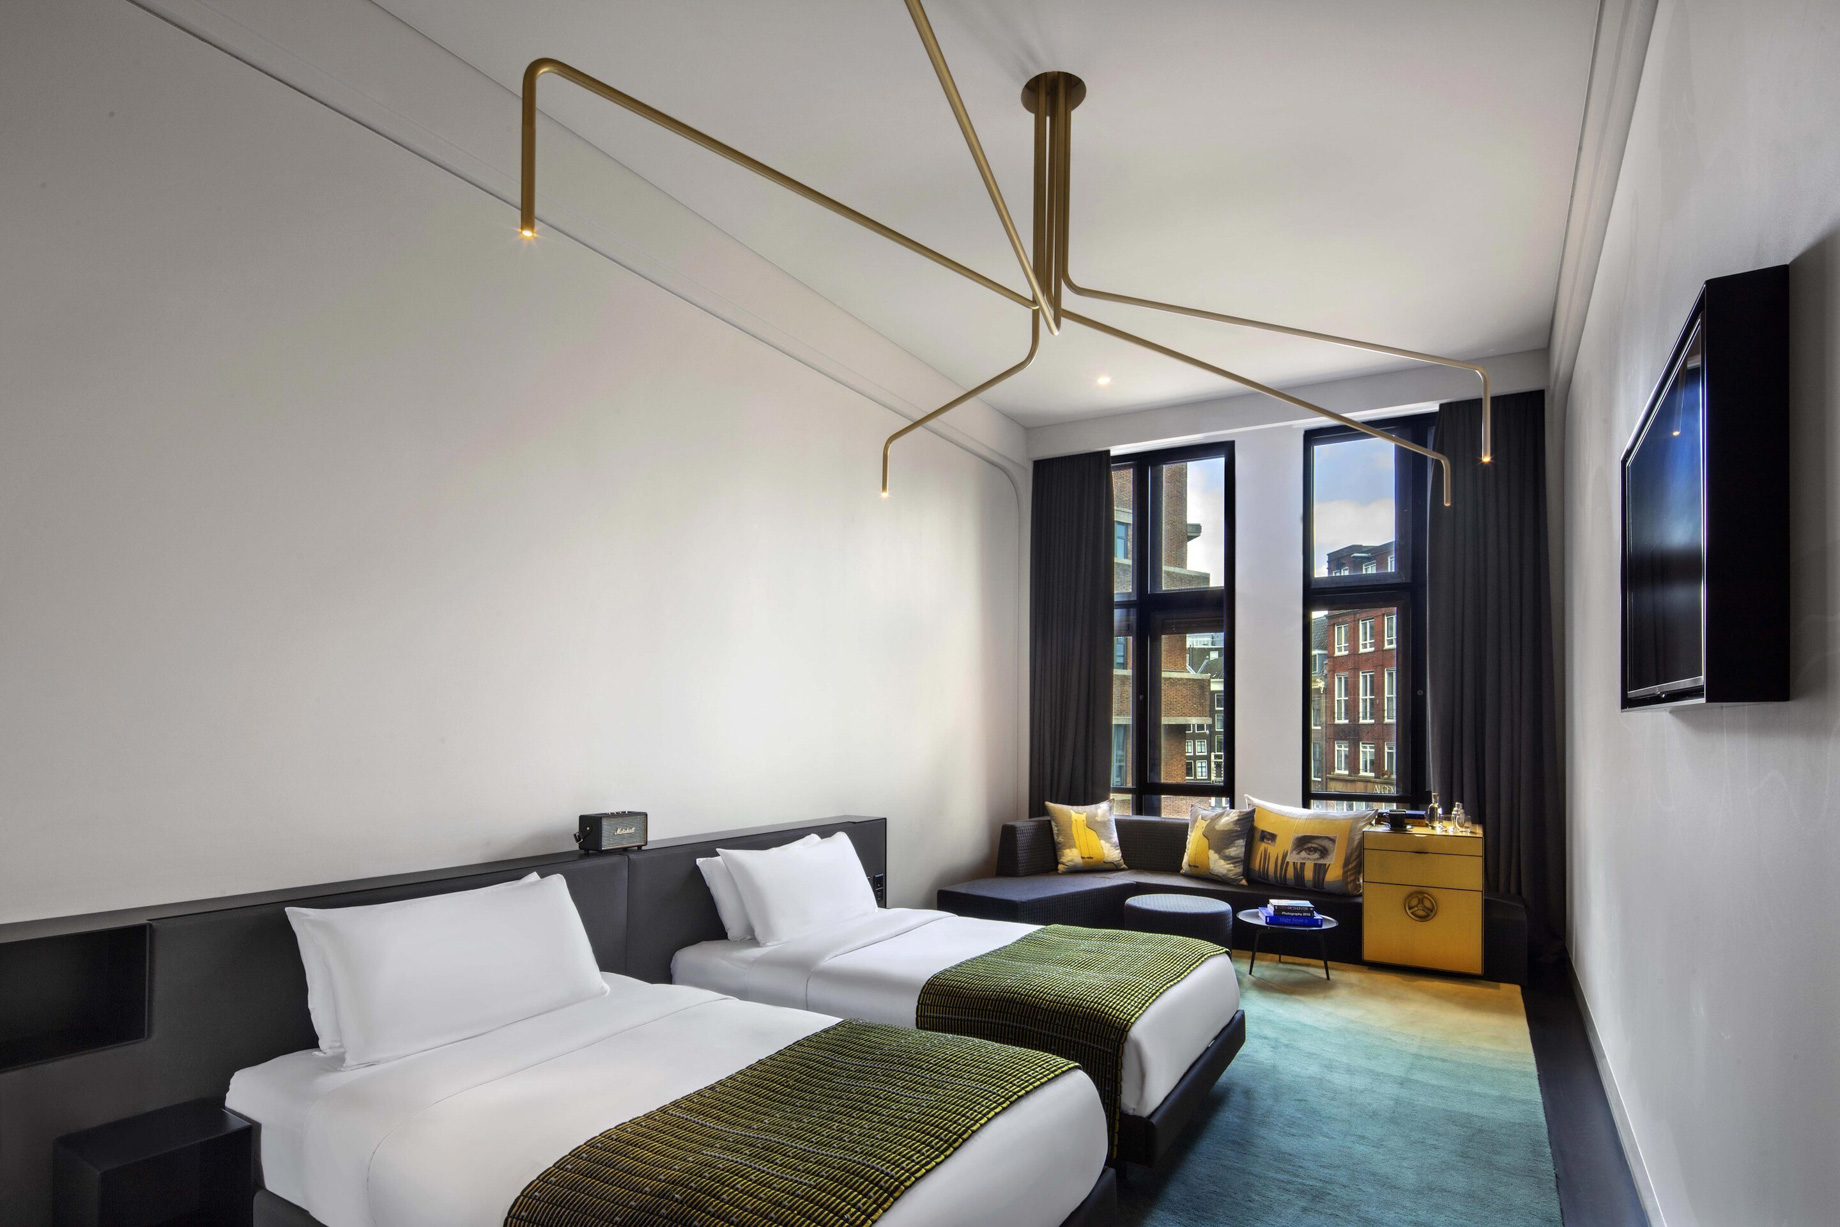 W Amsterdam Hotel – Amsterdam, Netherlands – Fabulous Bank Guest Room Decor